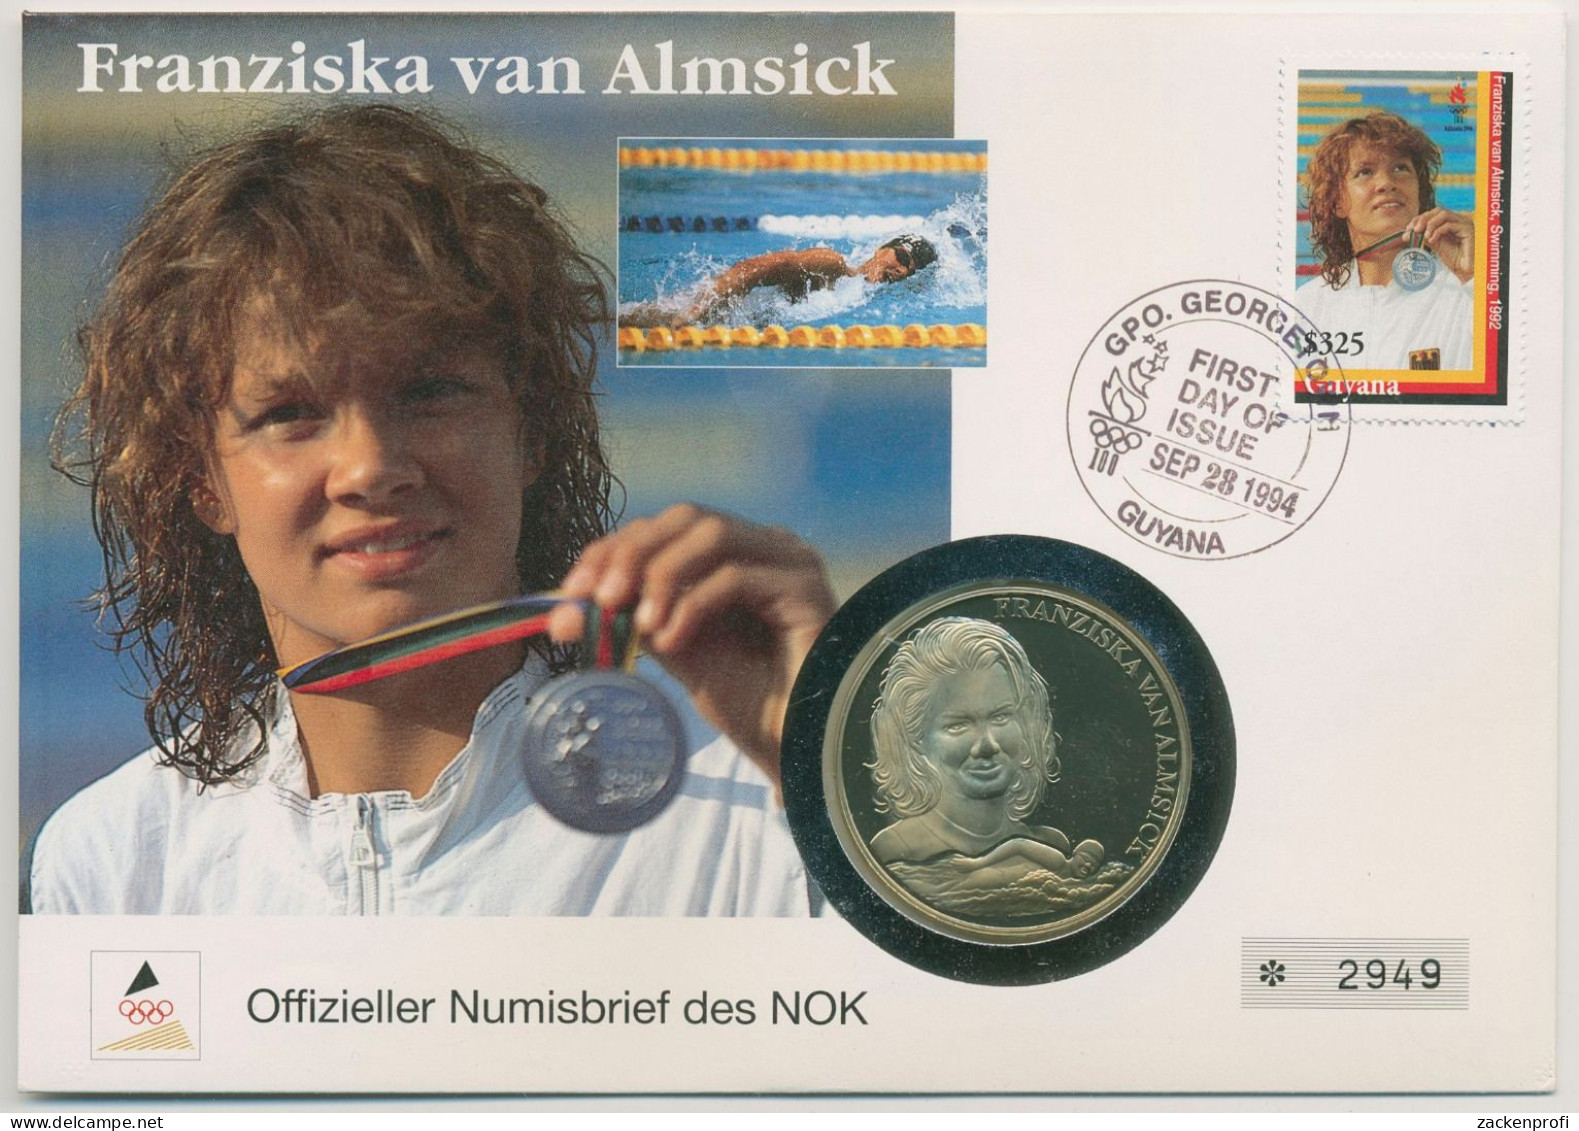 Guyana 1994 Olympia Franziska V. Almsick Numisbrief Mit Medaille (N448) - Guyana